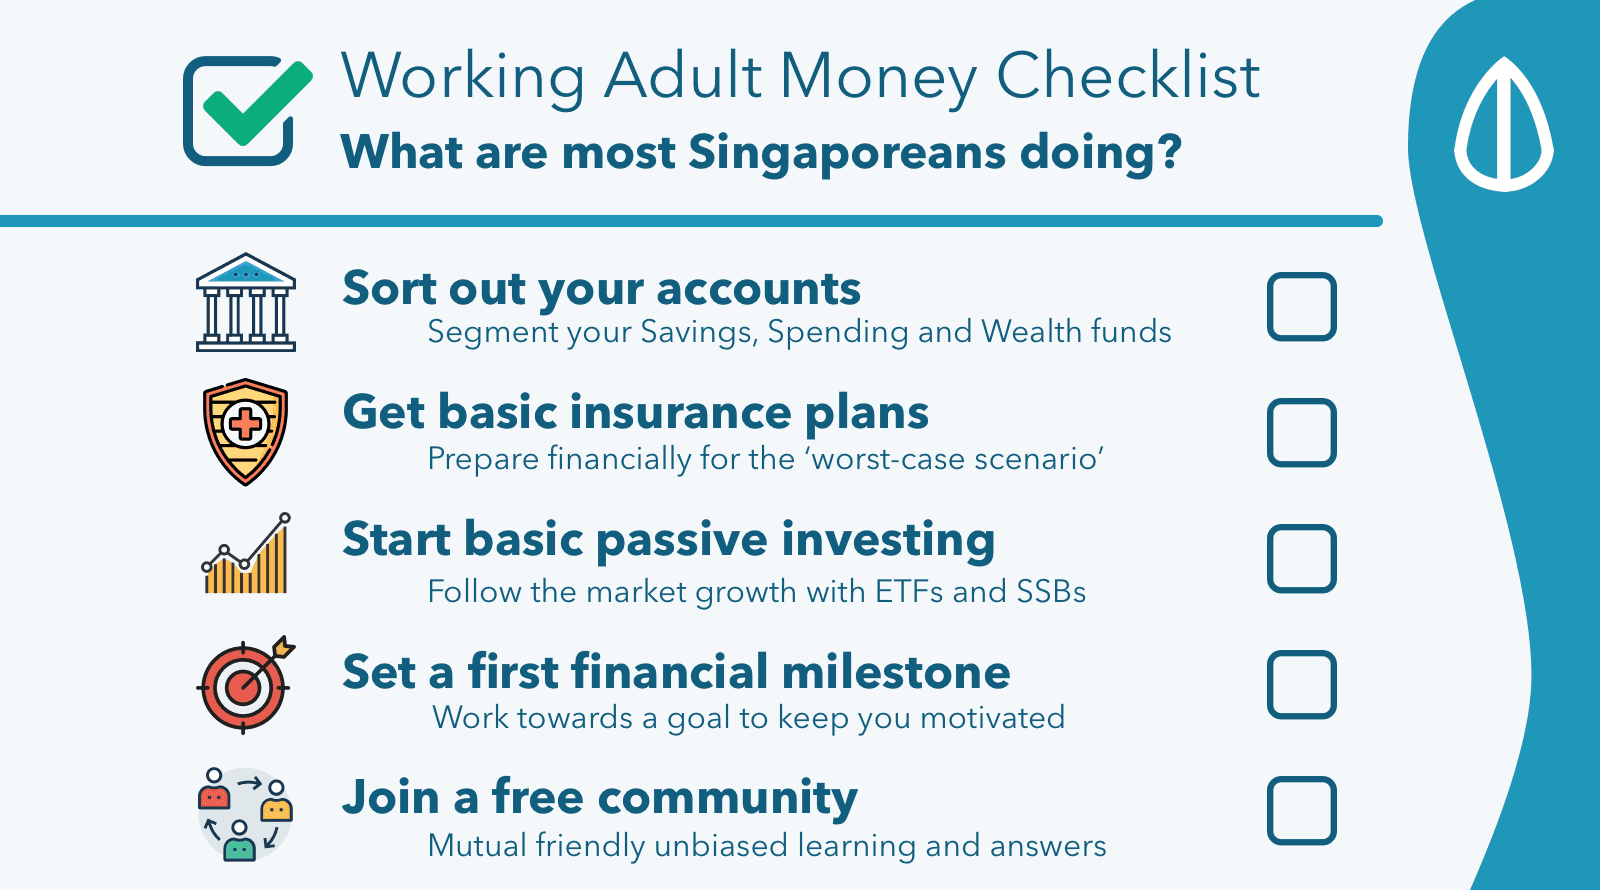 Working Adult Checklist Singapore